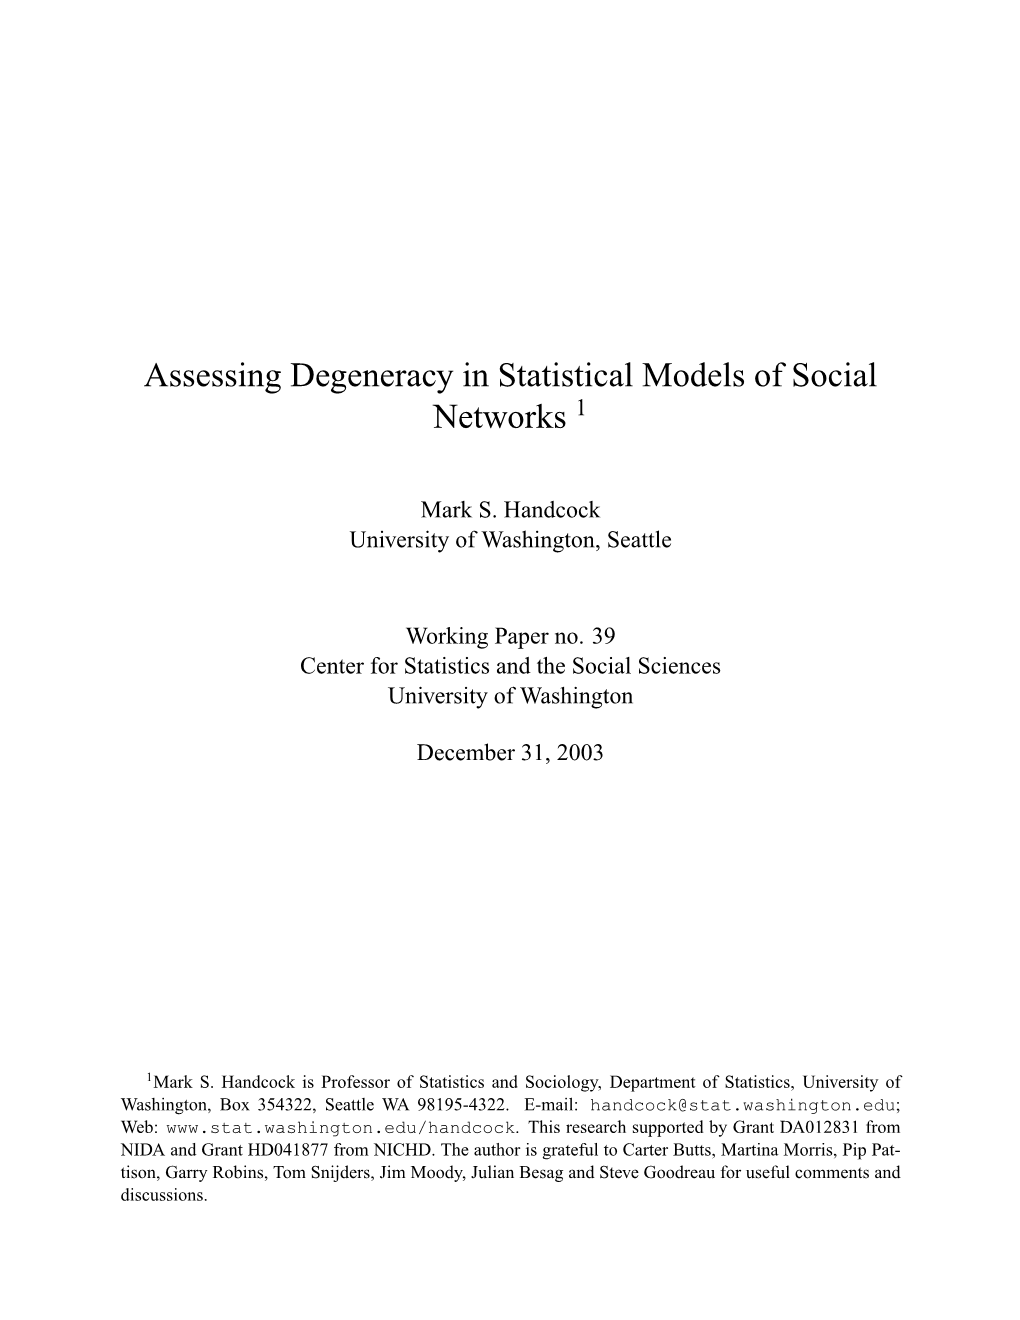 Assessing Degeneracy in Statistical Models of Social Networks 1